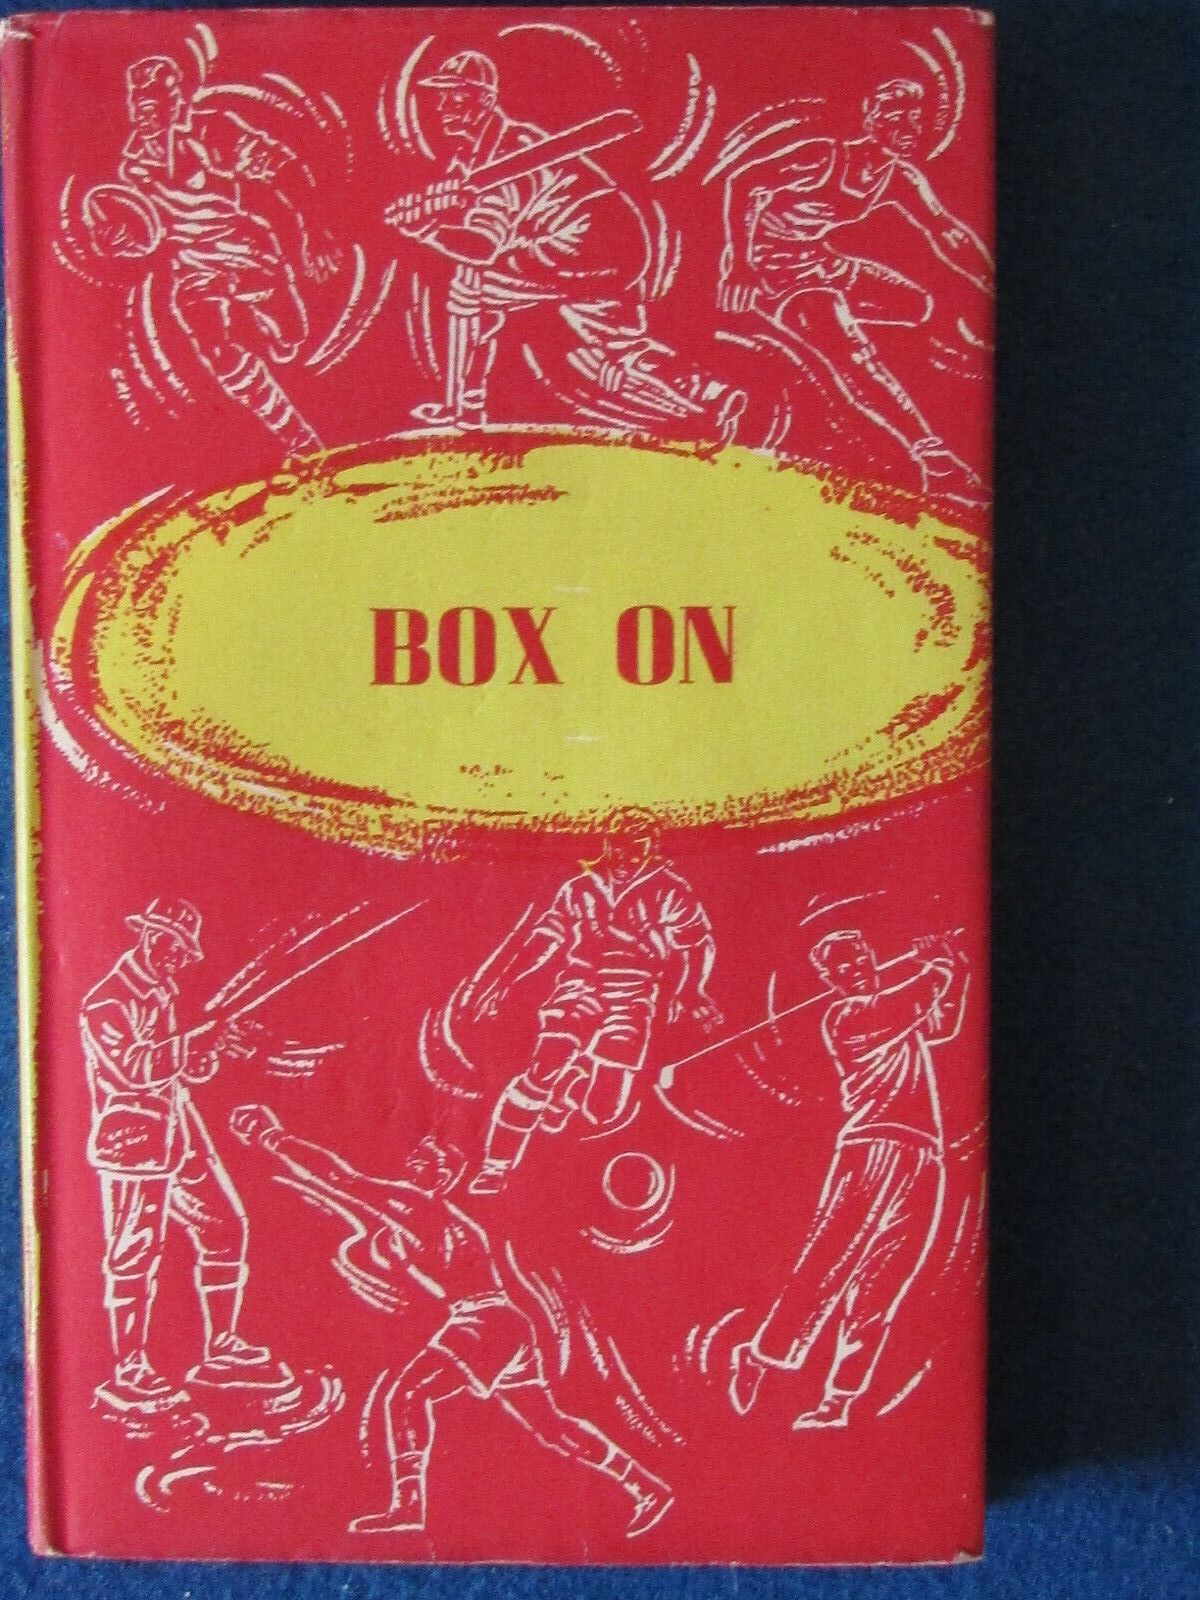 Sportsmans Book Club - Hardback Book - Box On - Eugene Henderson - 1959